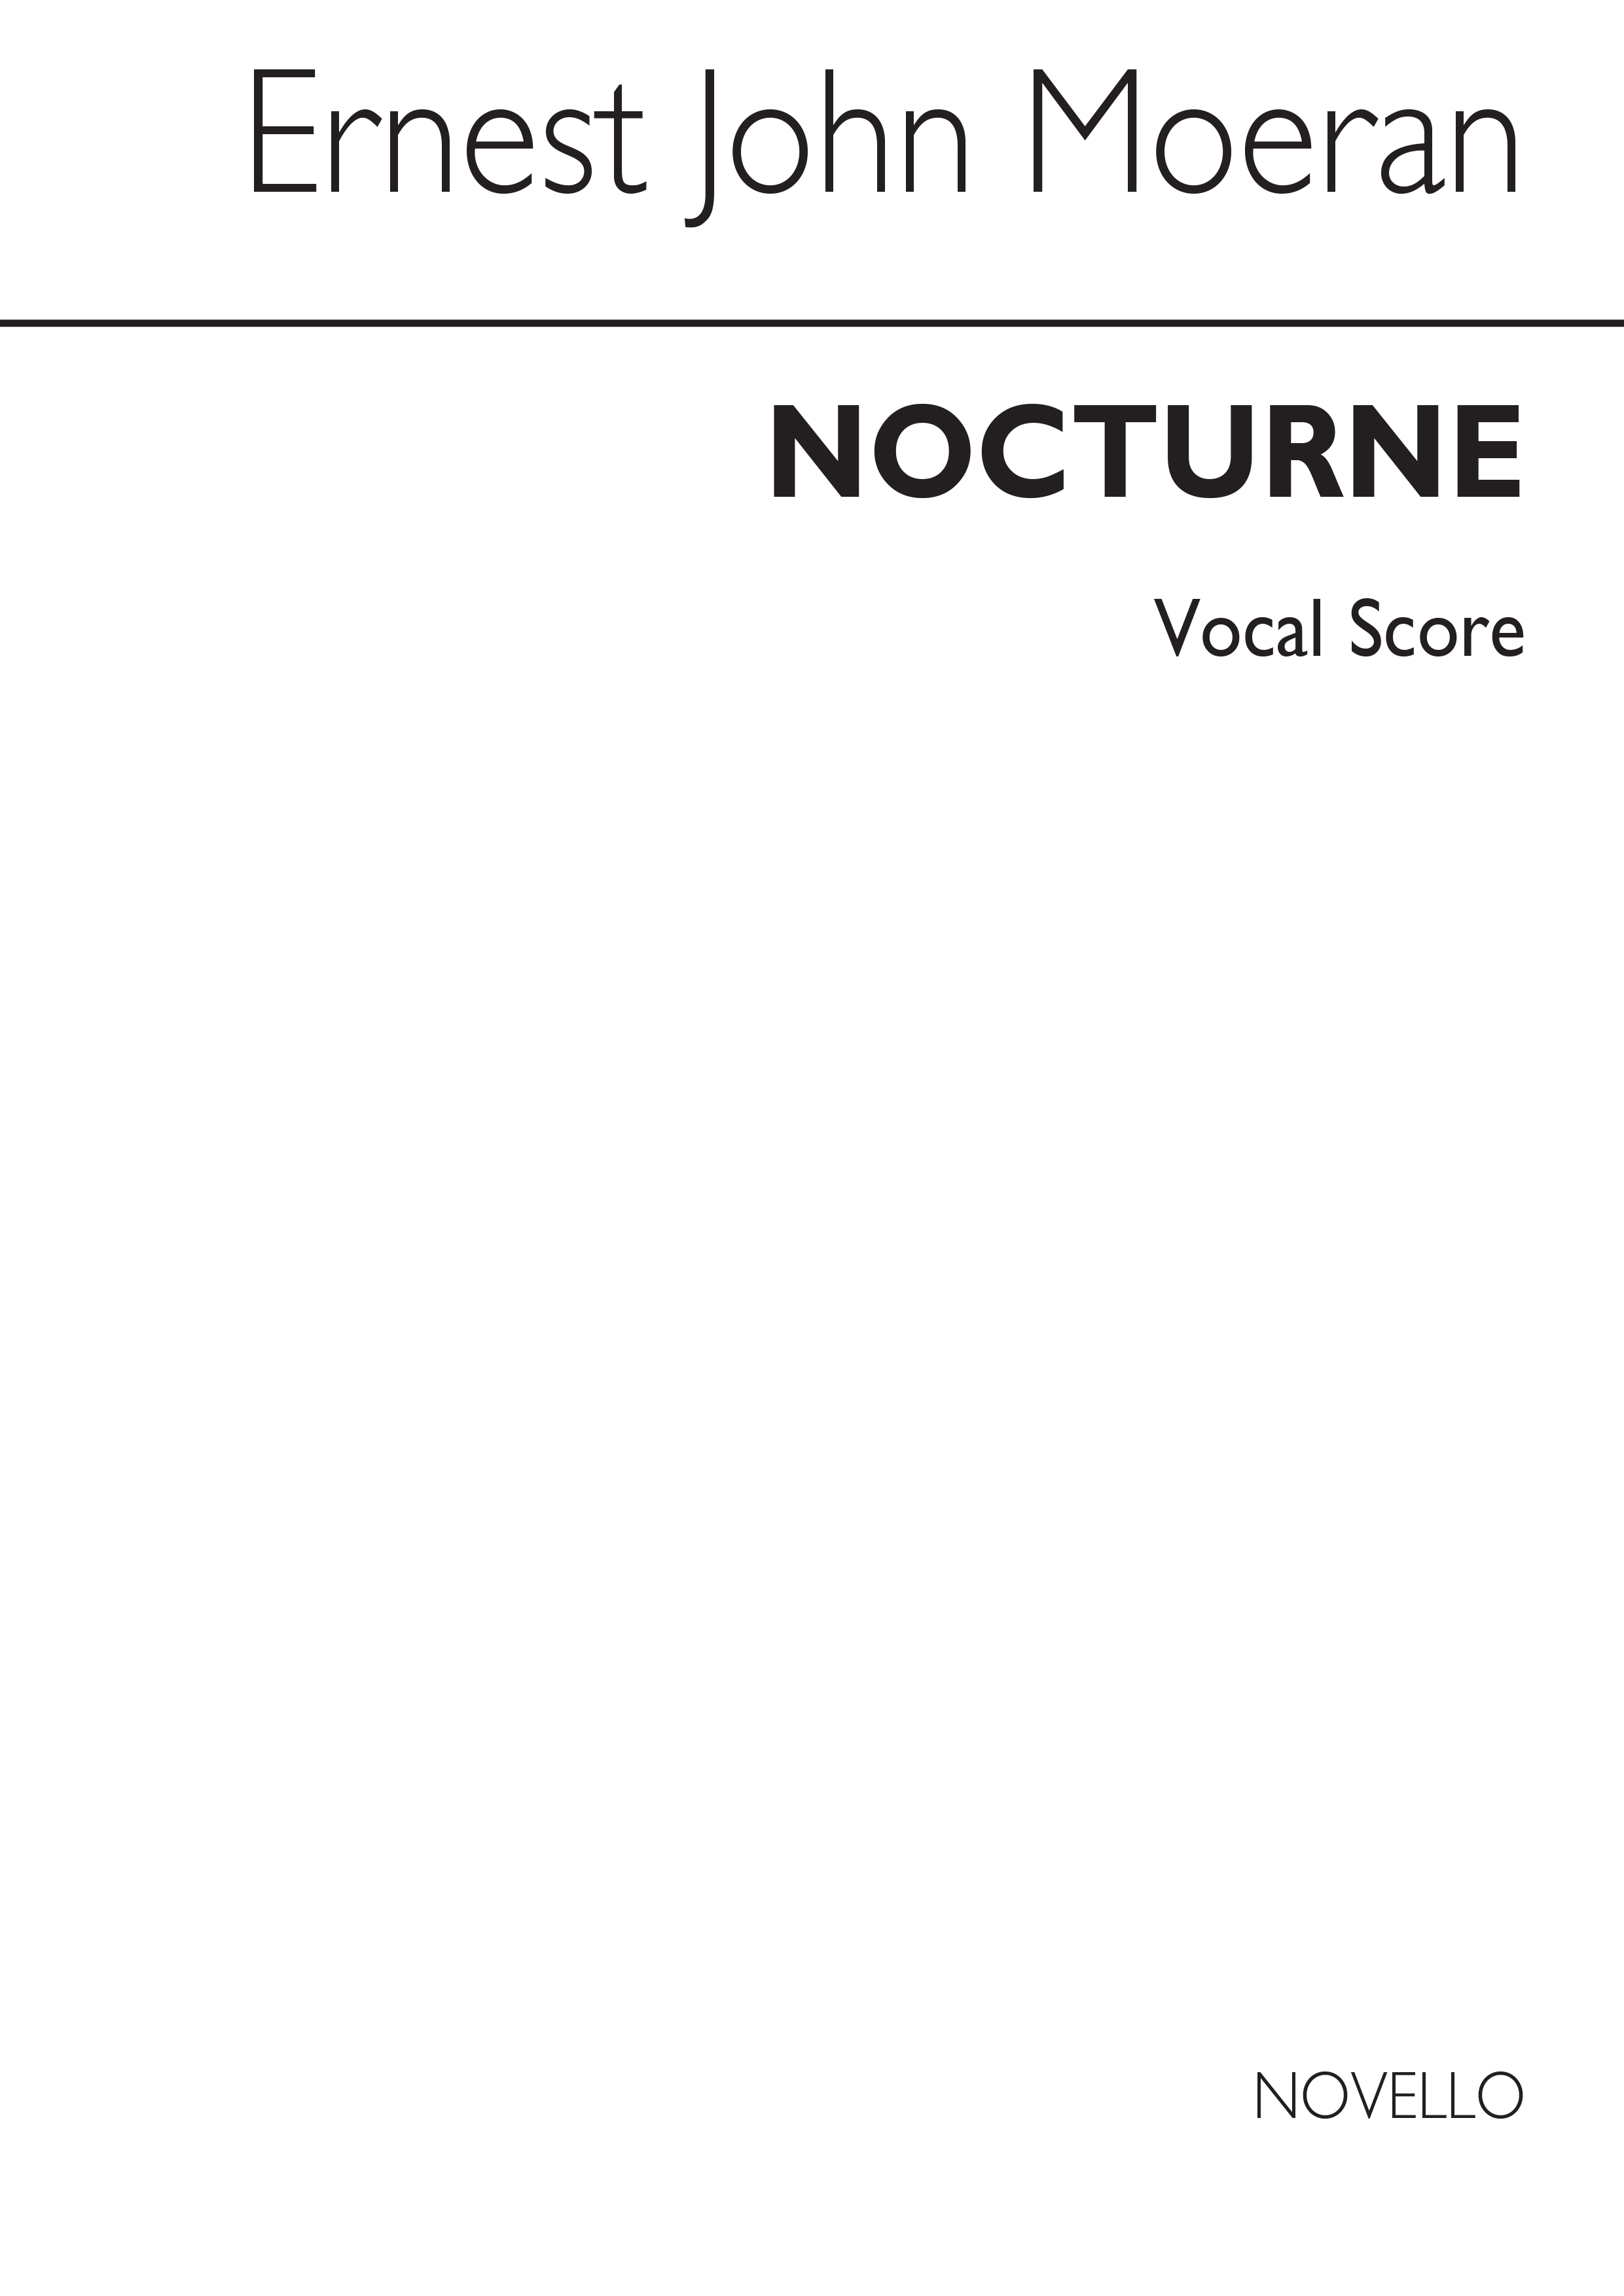 Ernest John Moeran: Nocturne (Vocal Score)